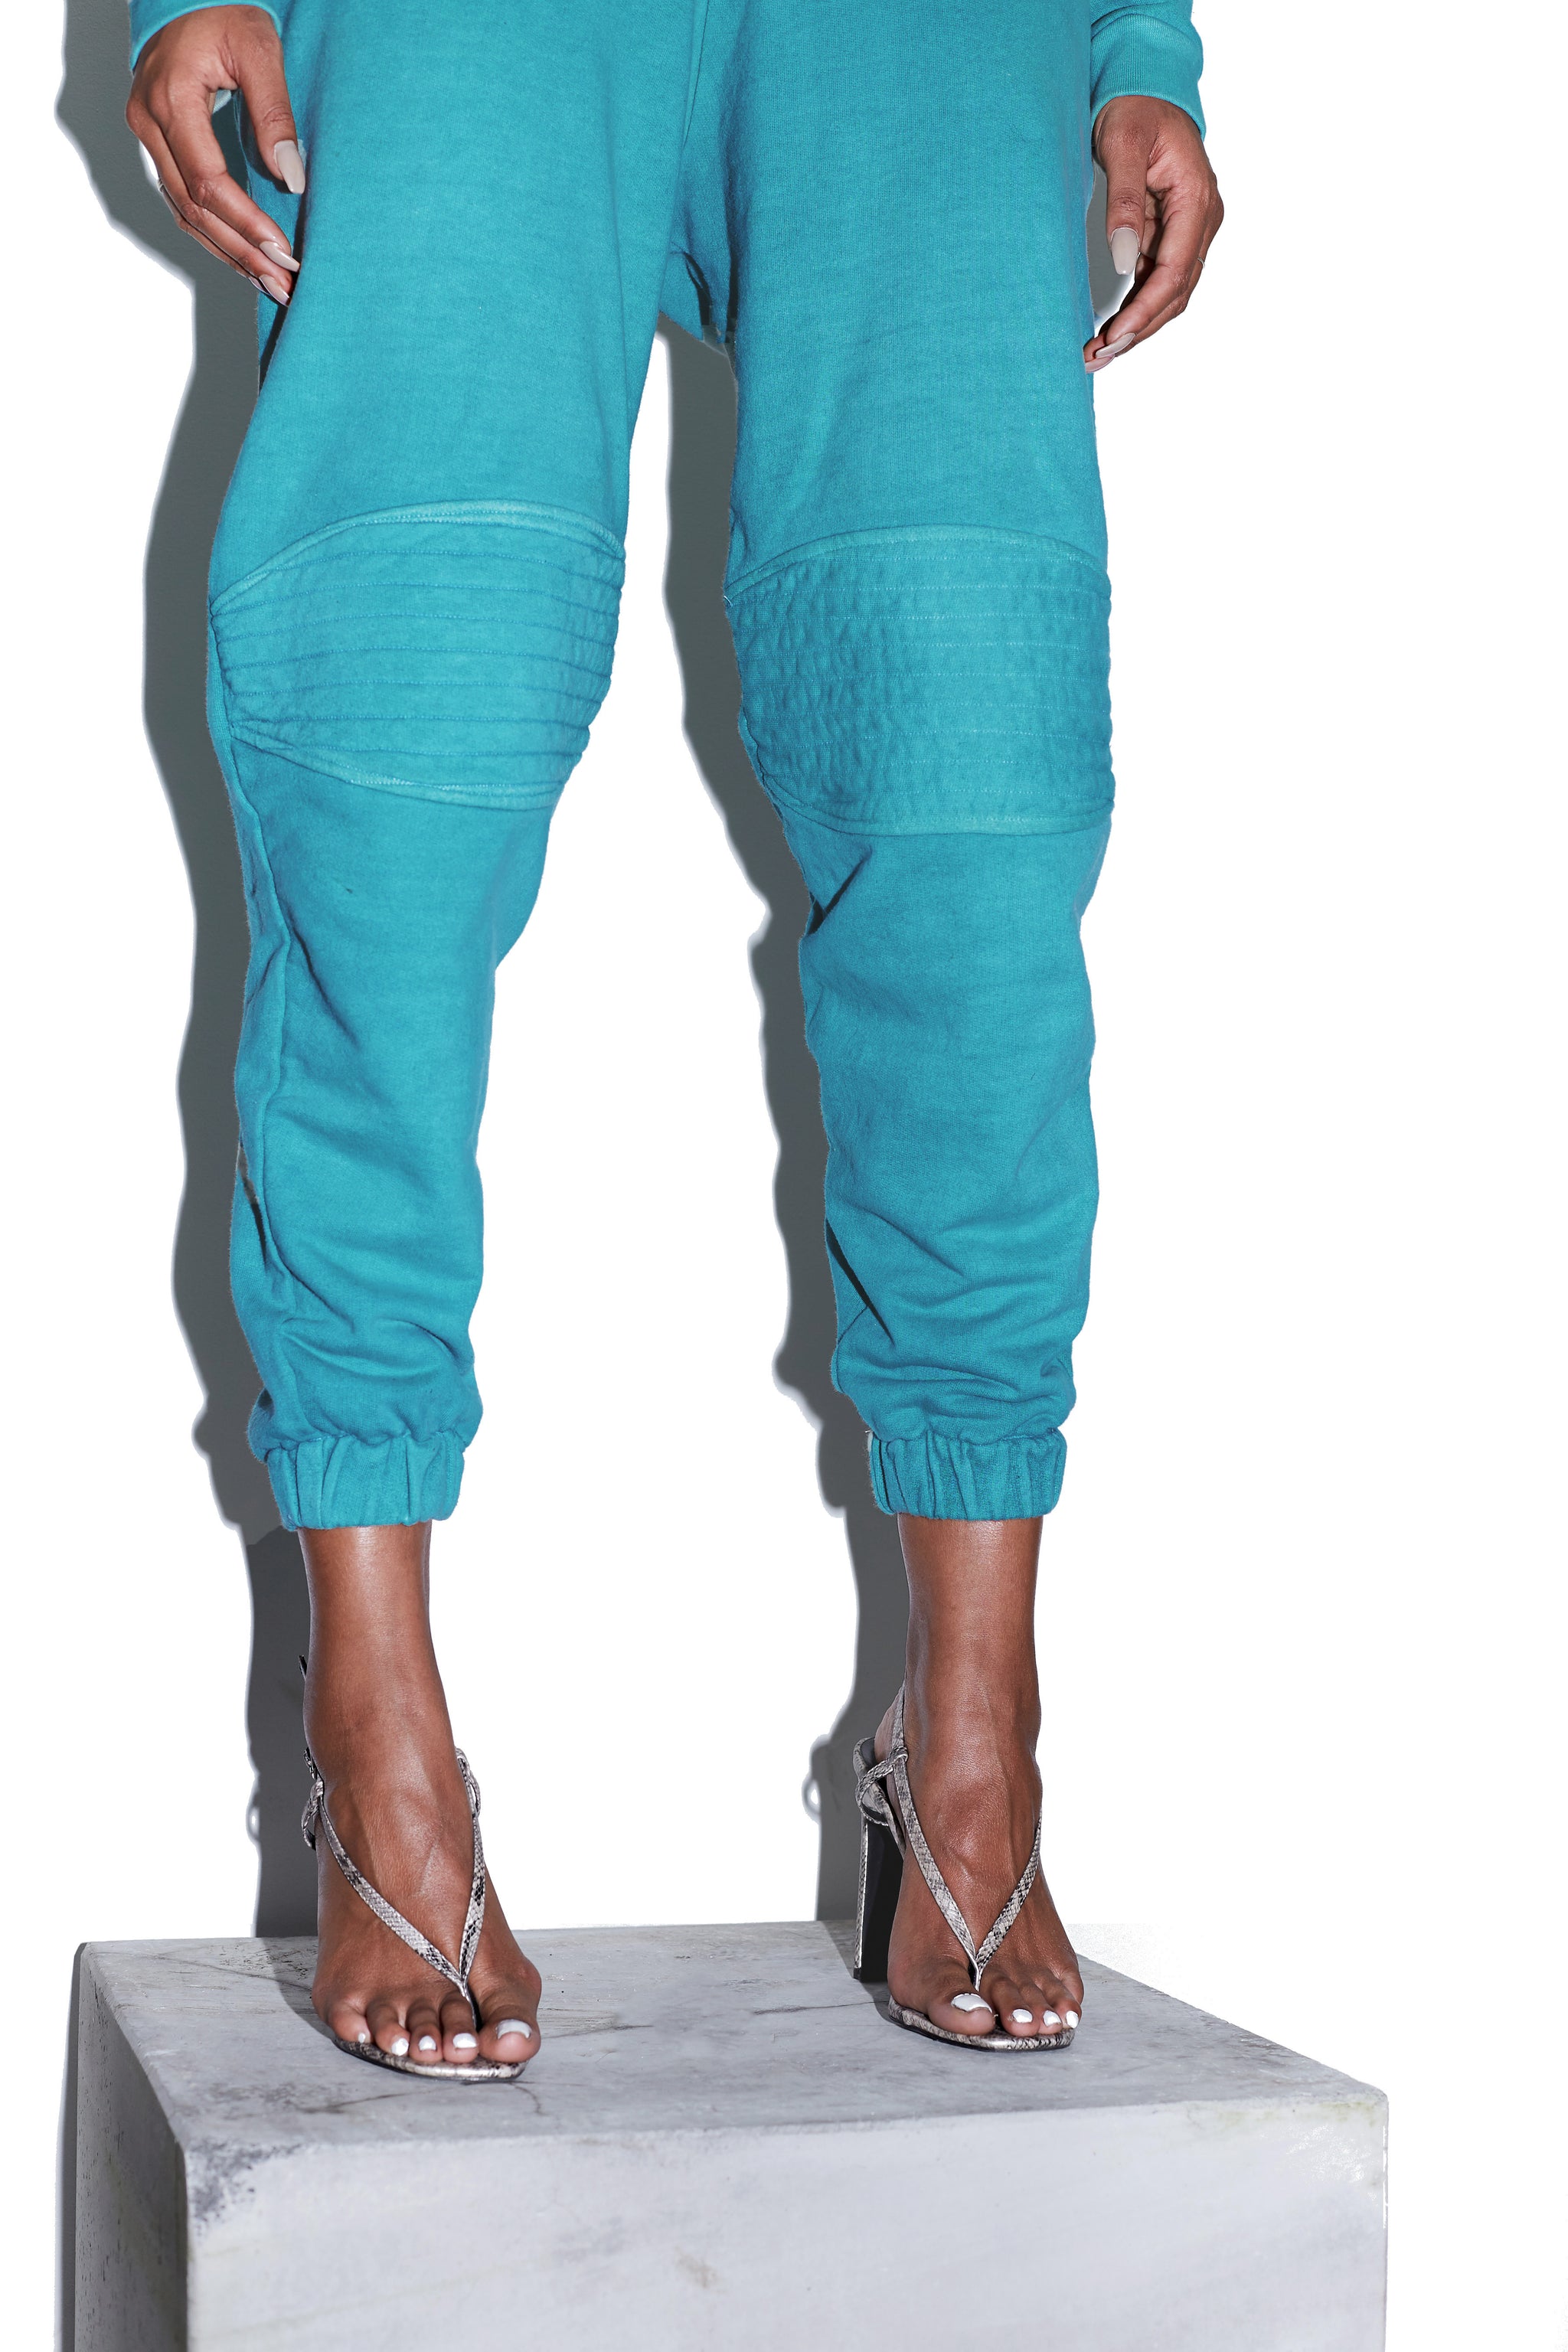 Model wears SIZE X-SMALL TONIK Slouch Panelled Joggers in Azure Blue by TheKLabel